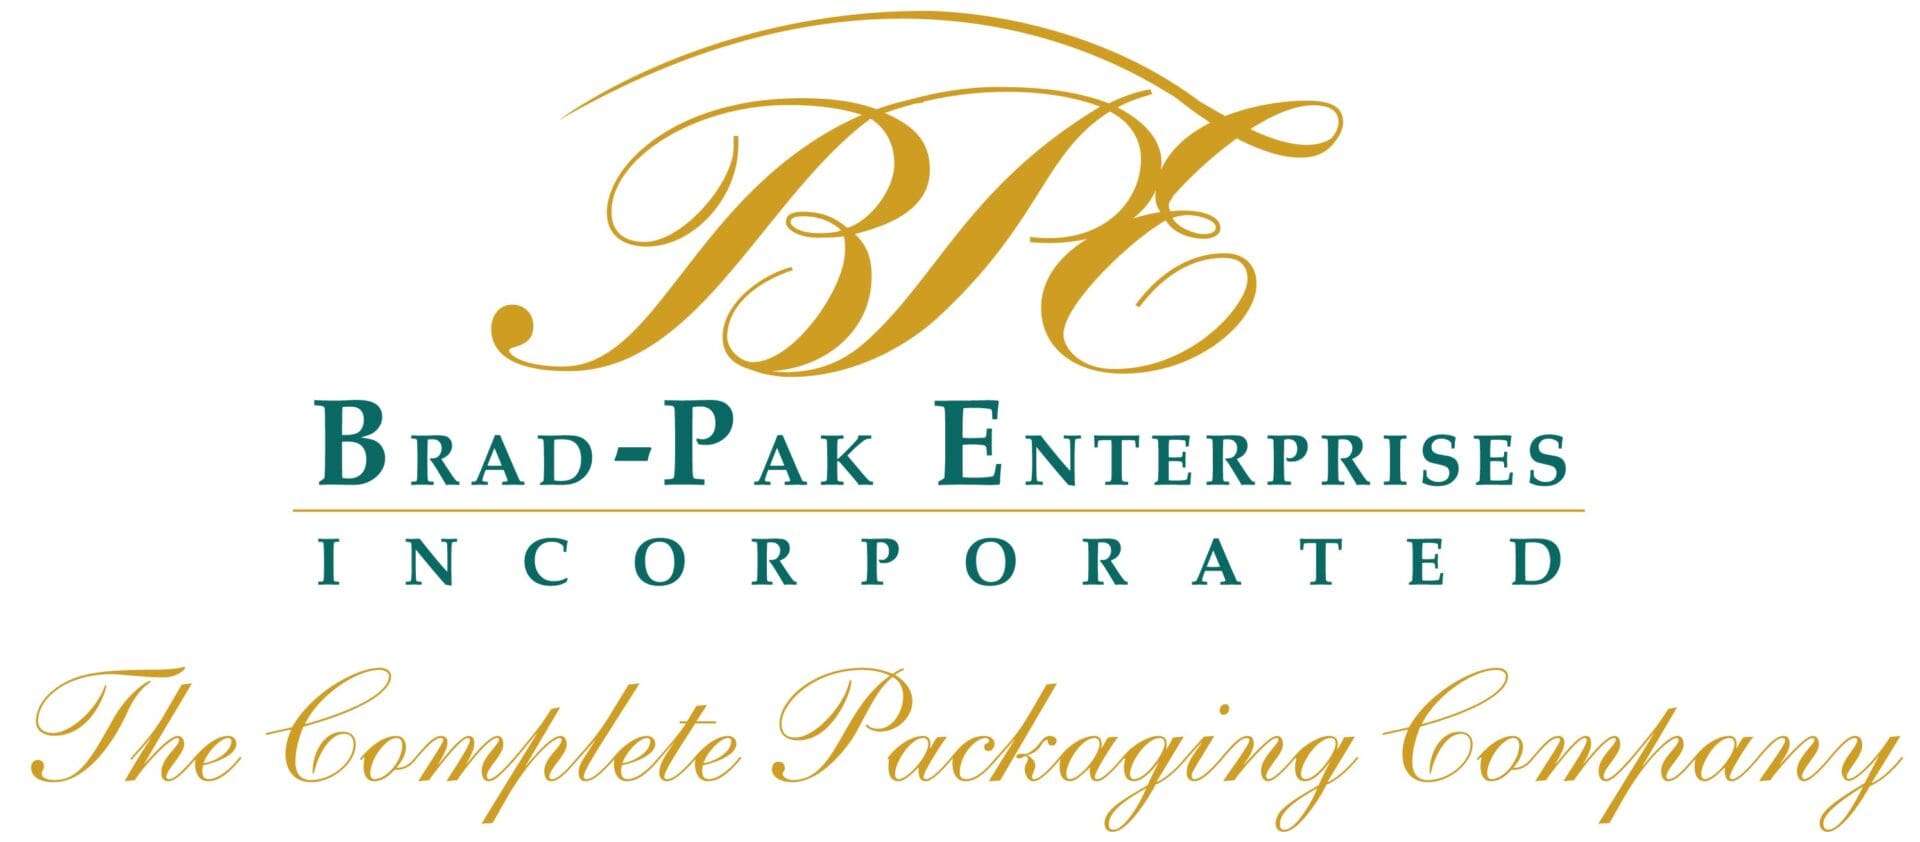 Brad Pak Enterprises incorporated logo and illustration